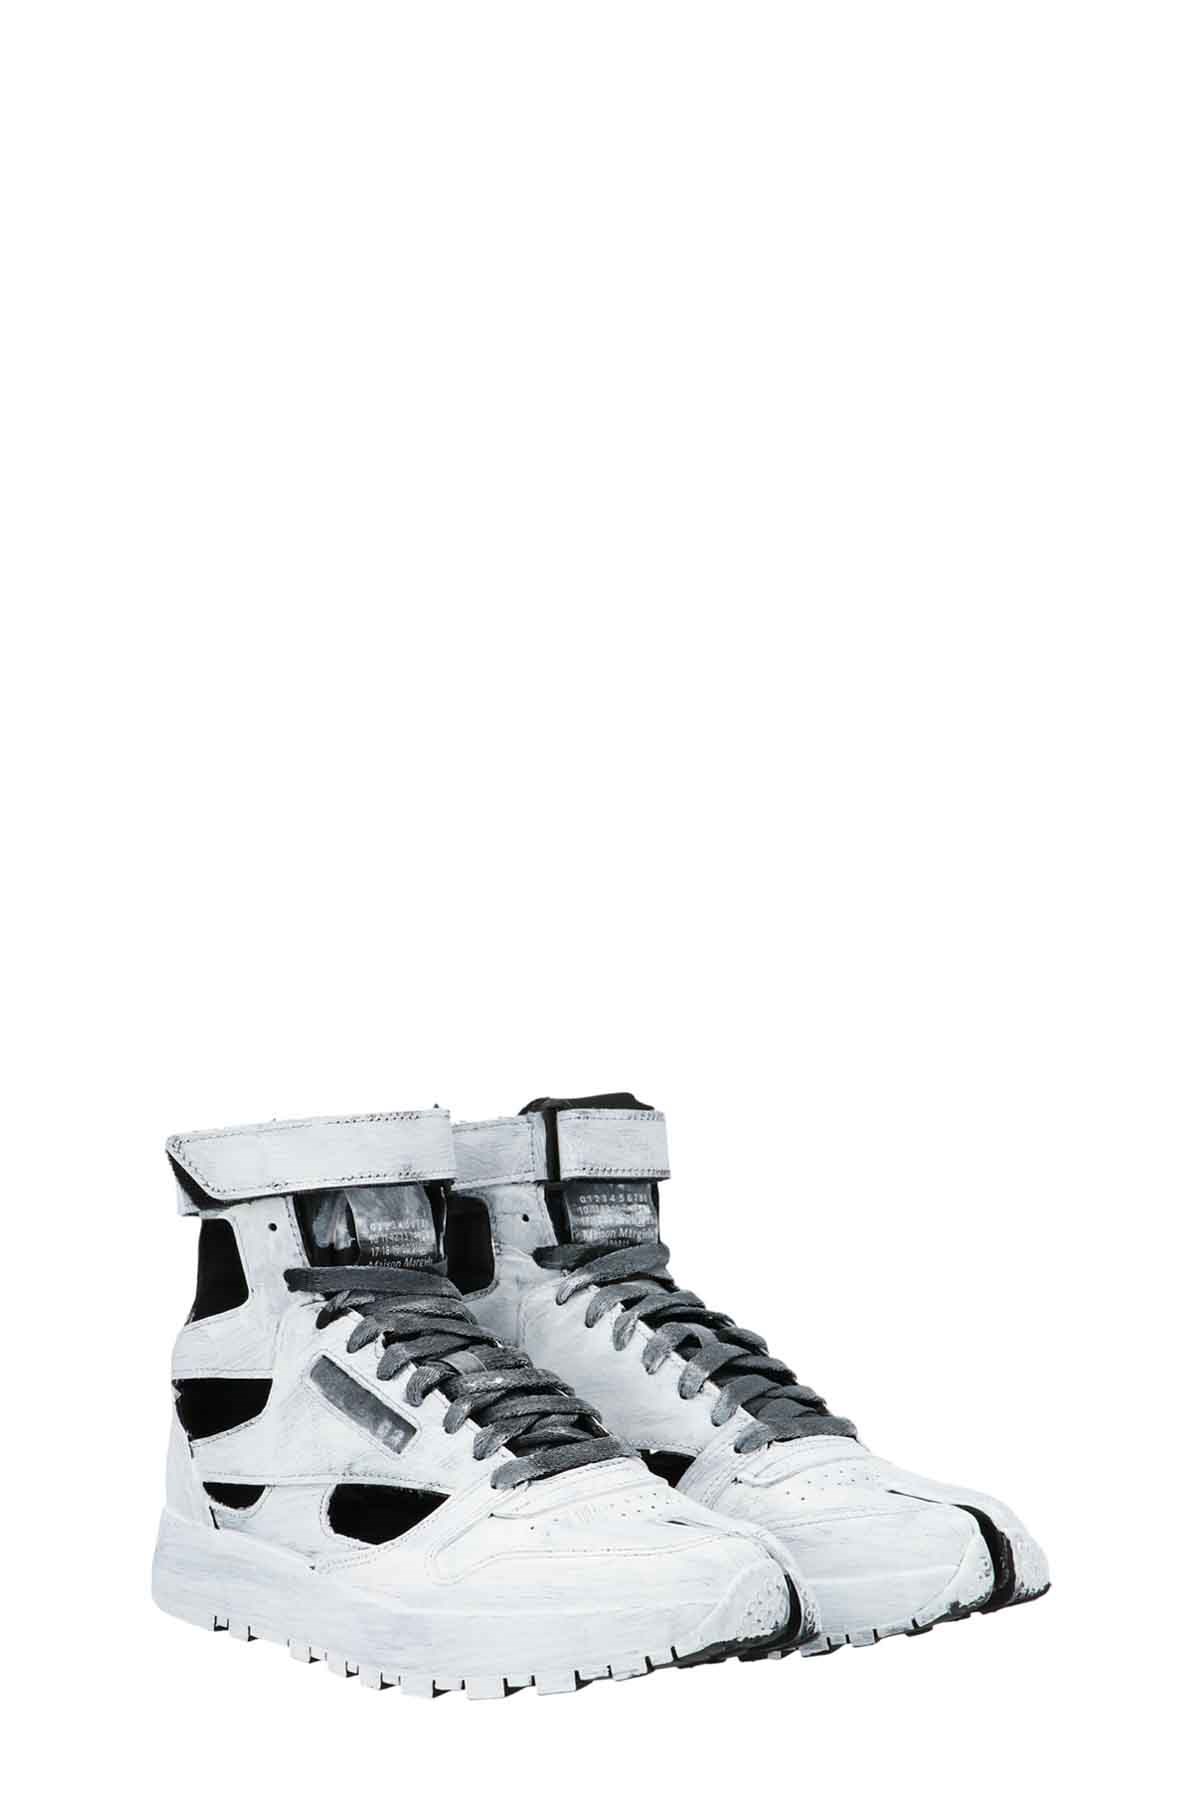 MAISON MARGIELA Sneaker 'Classic Leather Gladiator' Von Reebok X Maiso